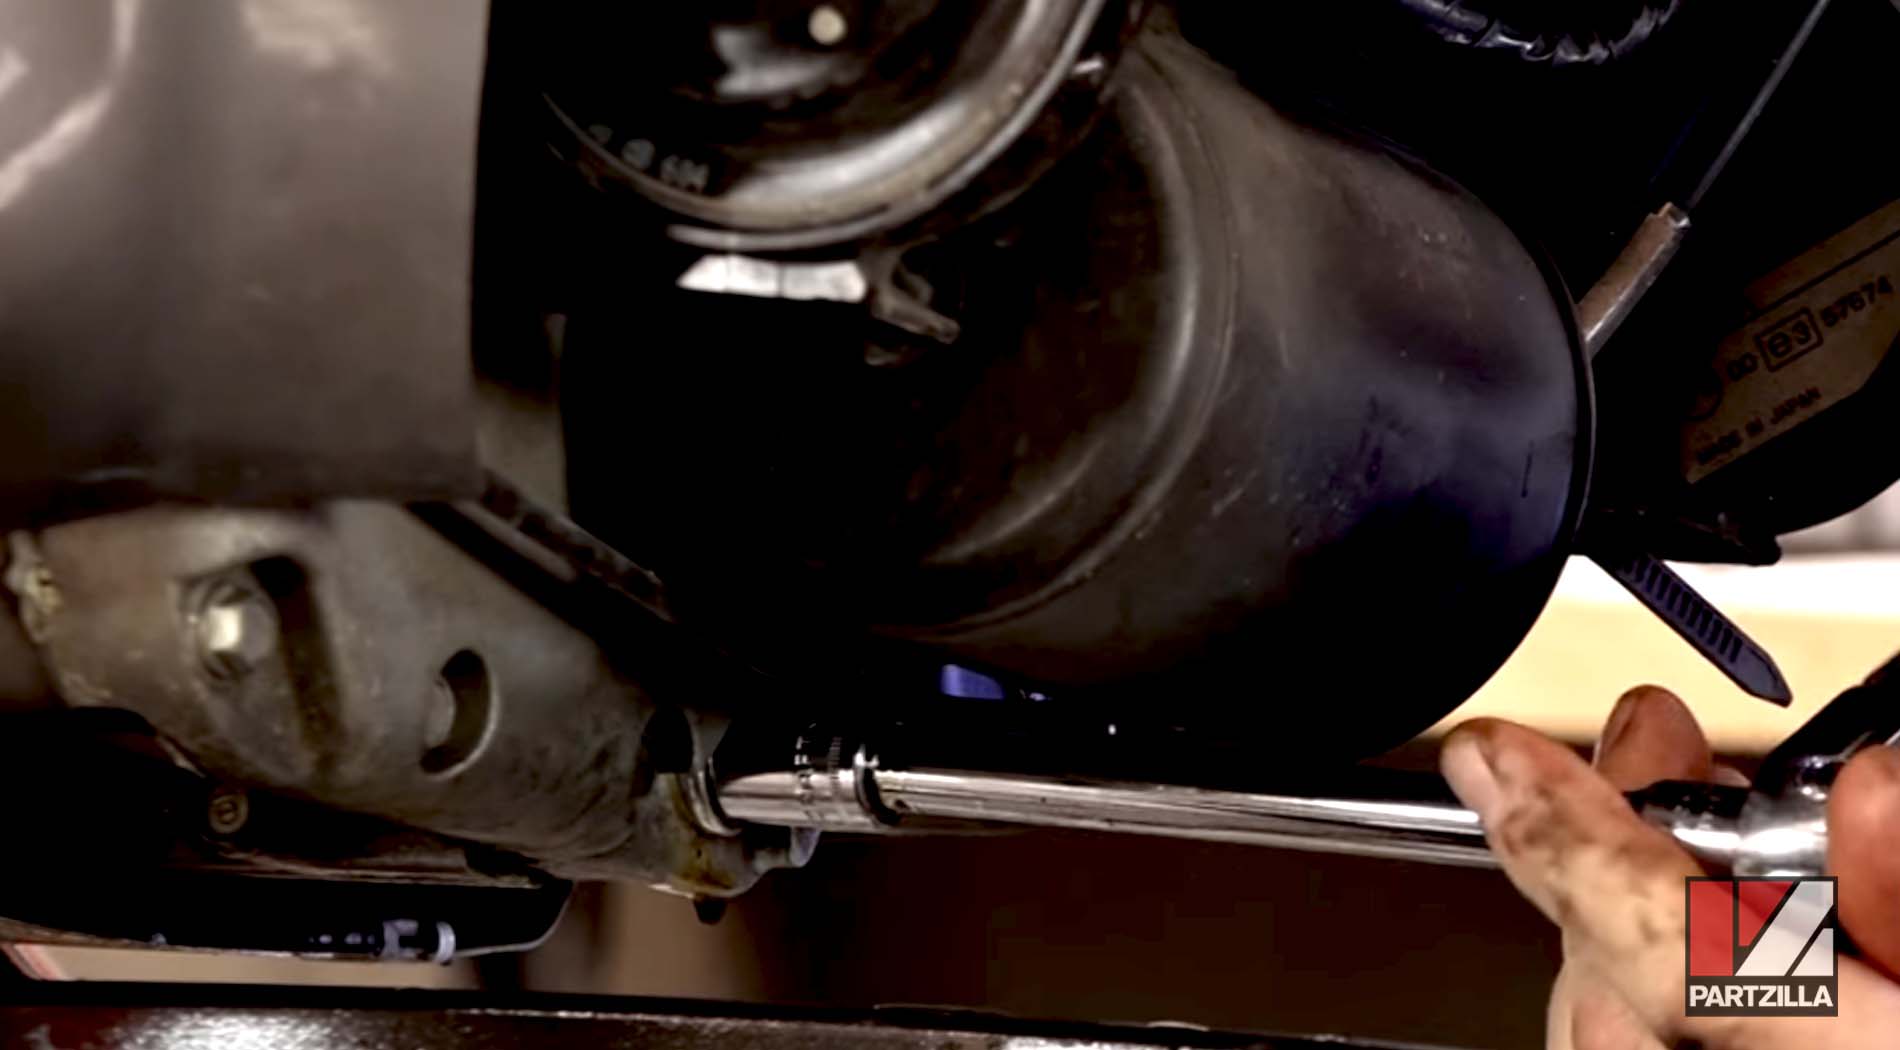 Honda Goldwing oil change drain plug replacement